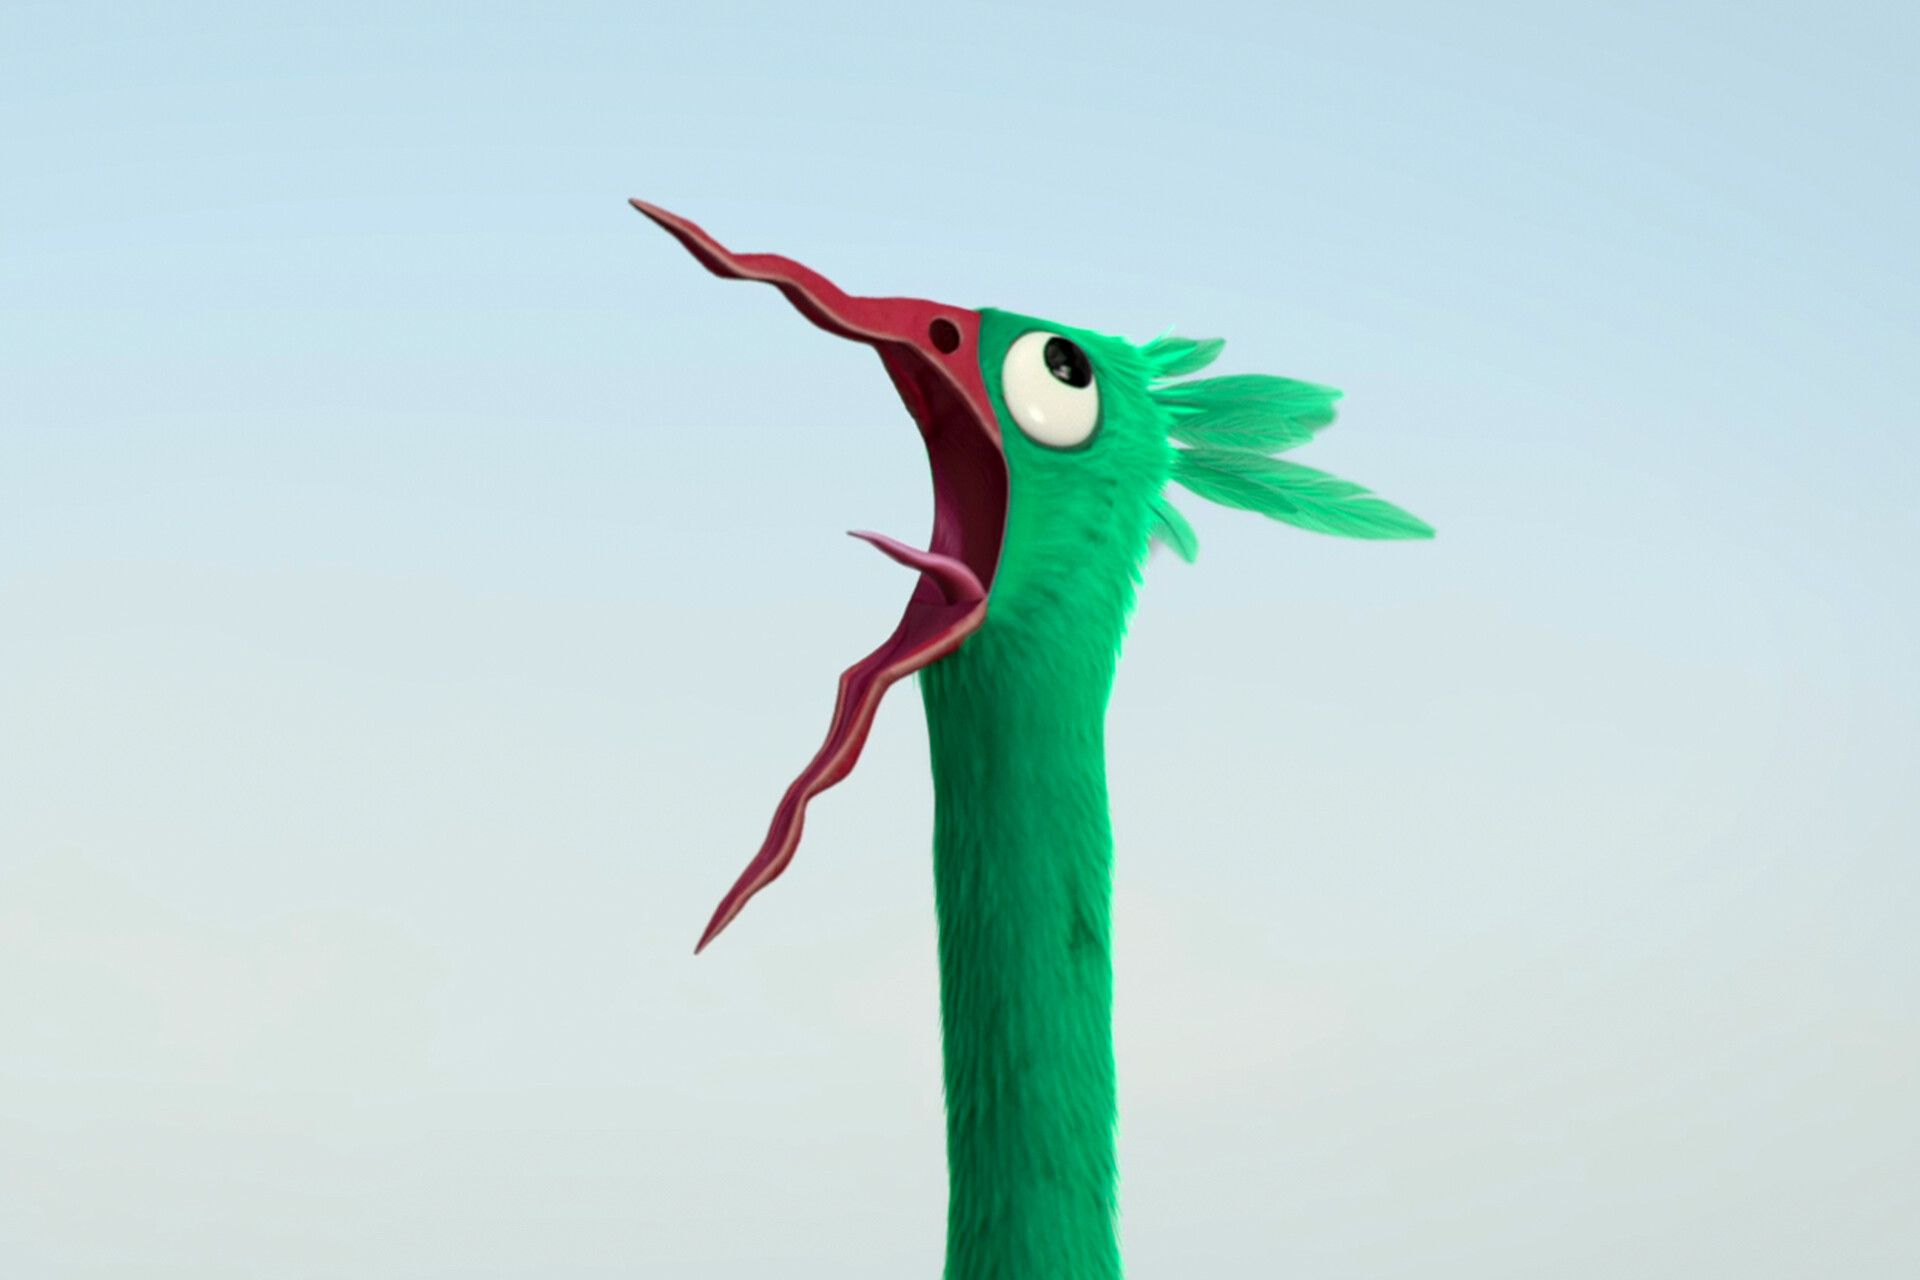 The Green Bird - MoPA animated film